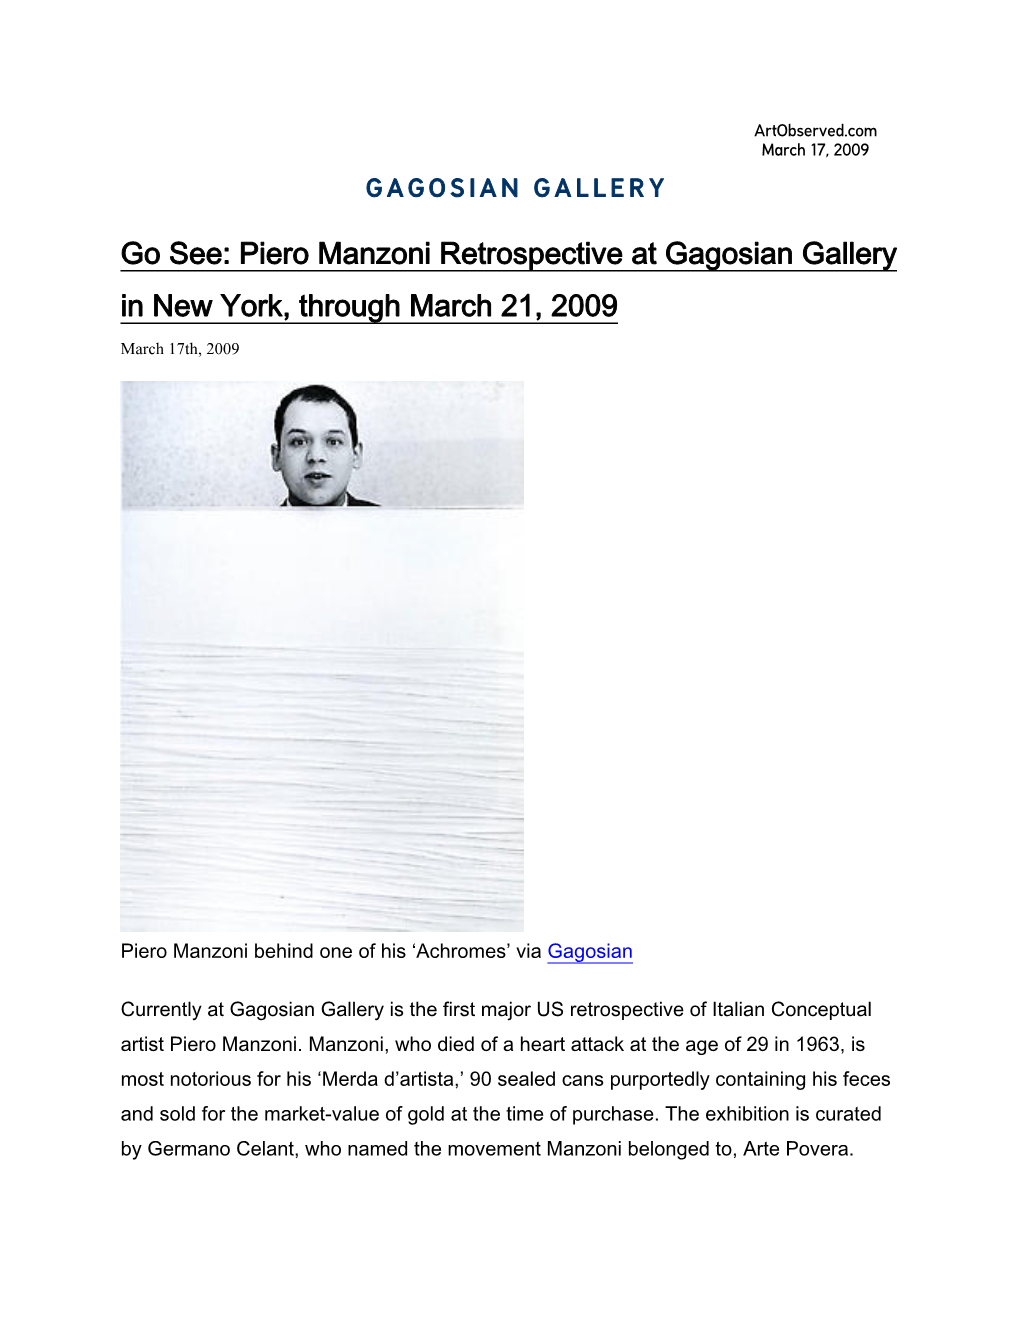 Go See: Piero Manzoni Retrospective at Gagosian Gallery in New York, Through March 21, 2009 March 17Th, 2009